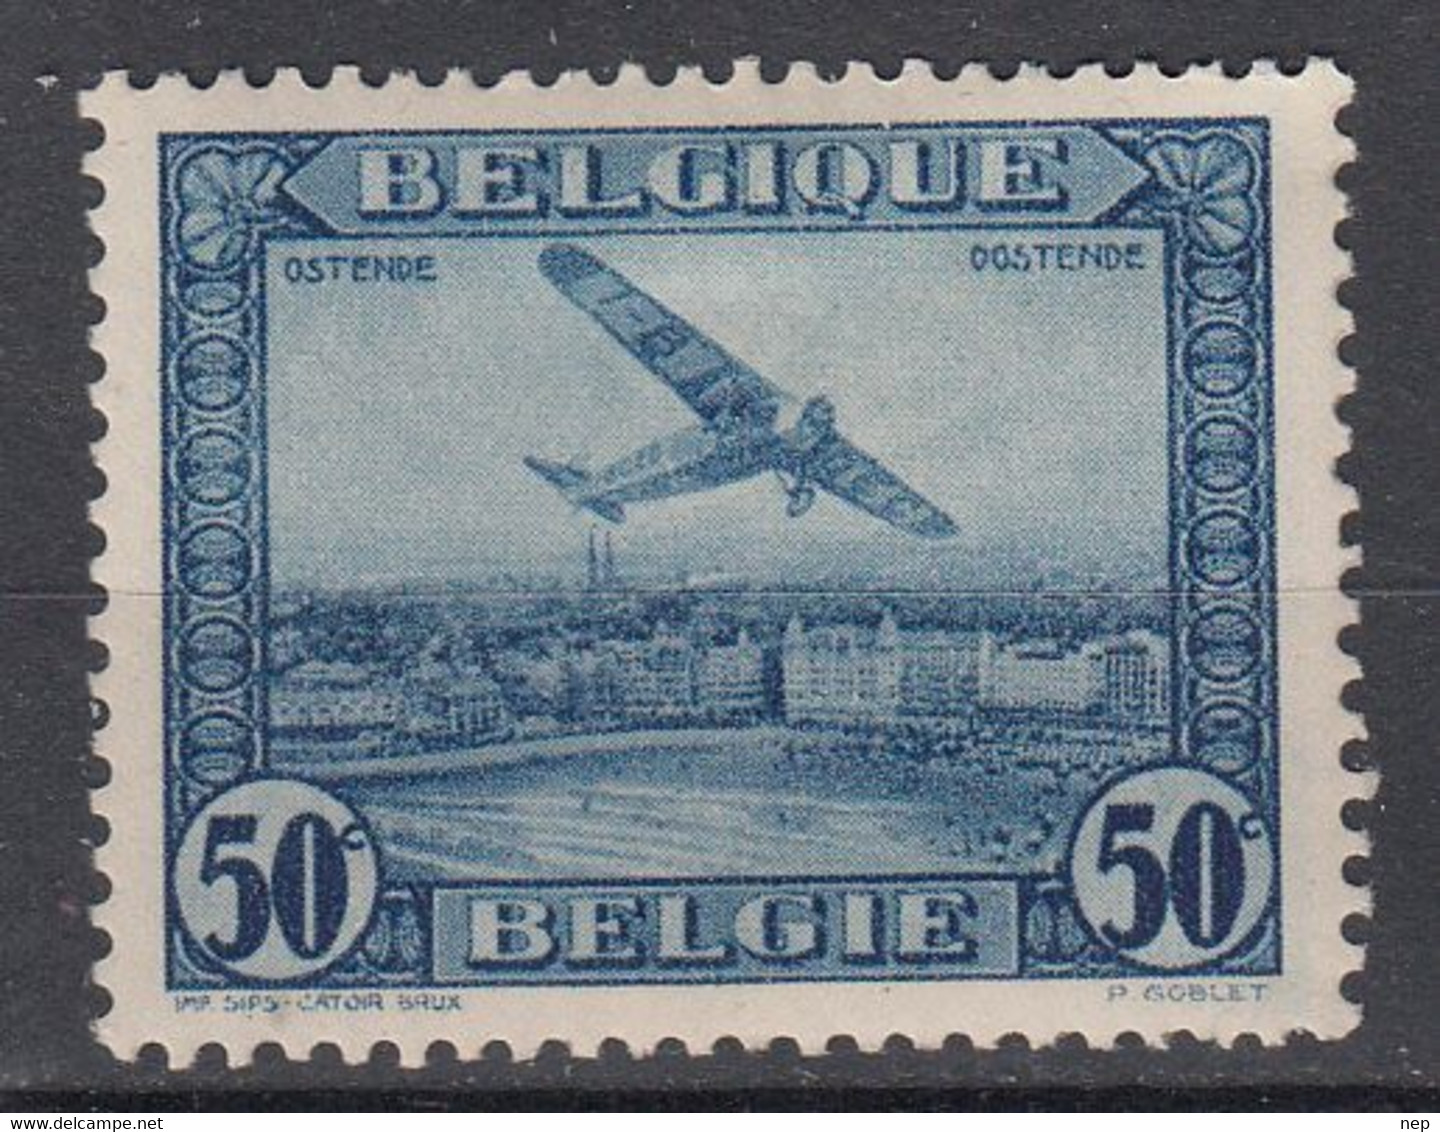 BELGIË - OPB - 1930 - PA 1 - MH* - Postfris